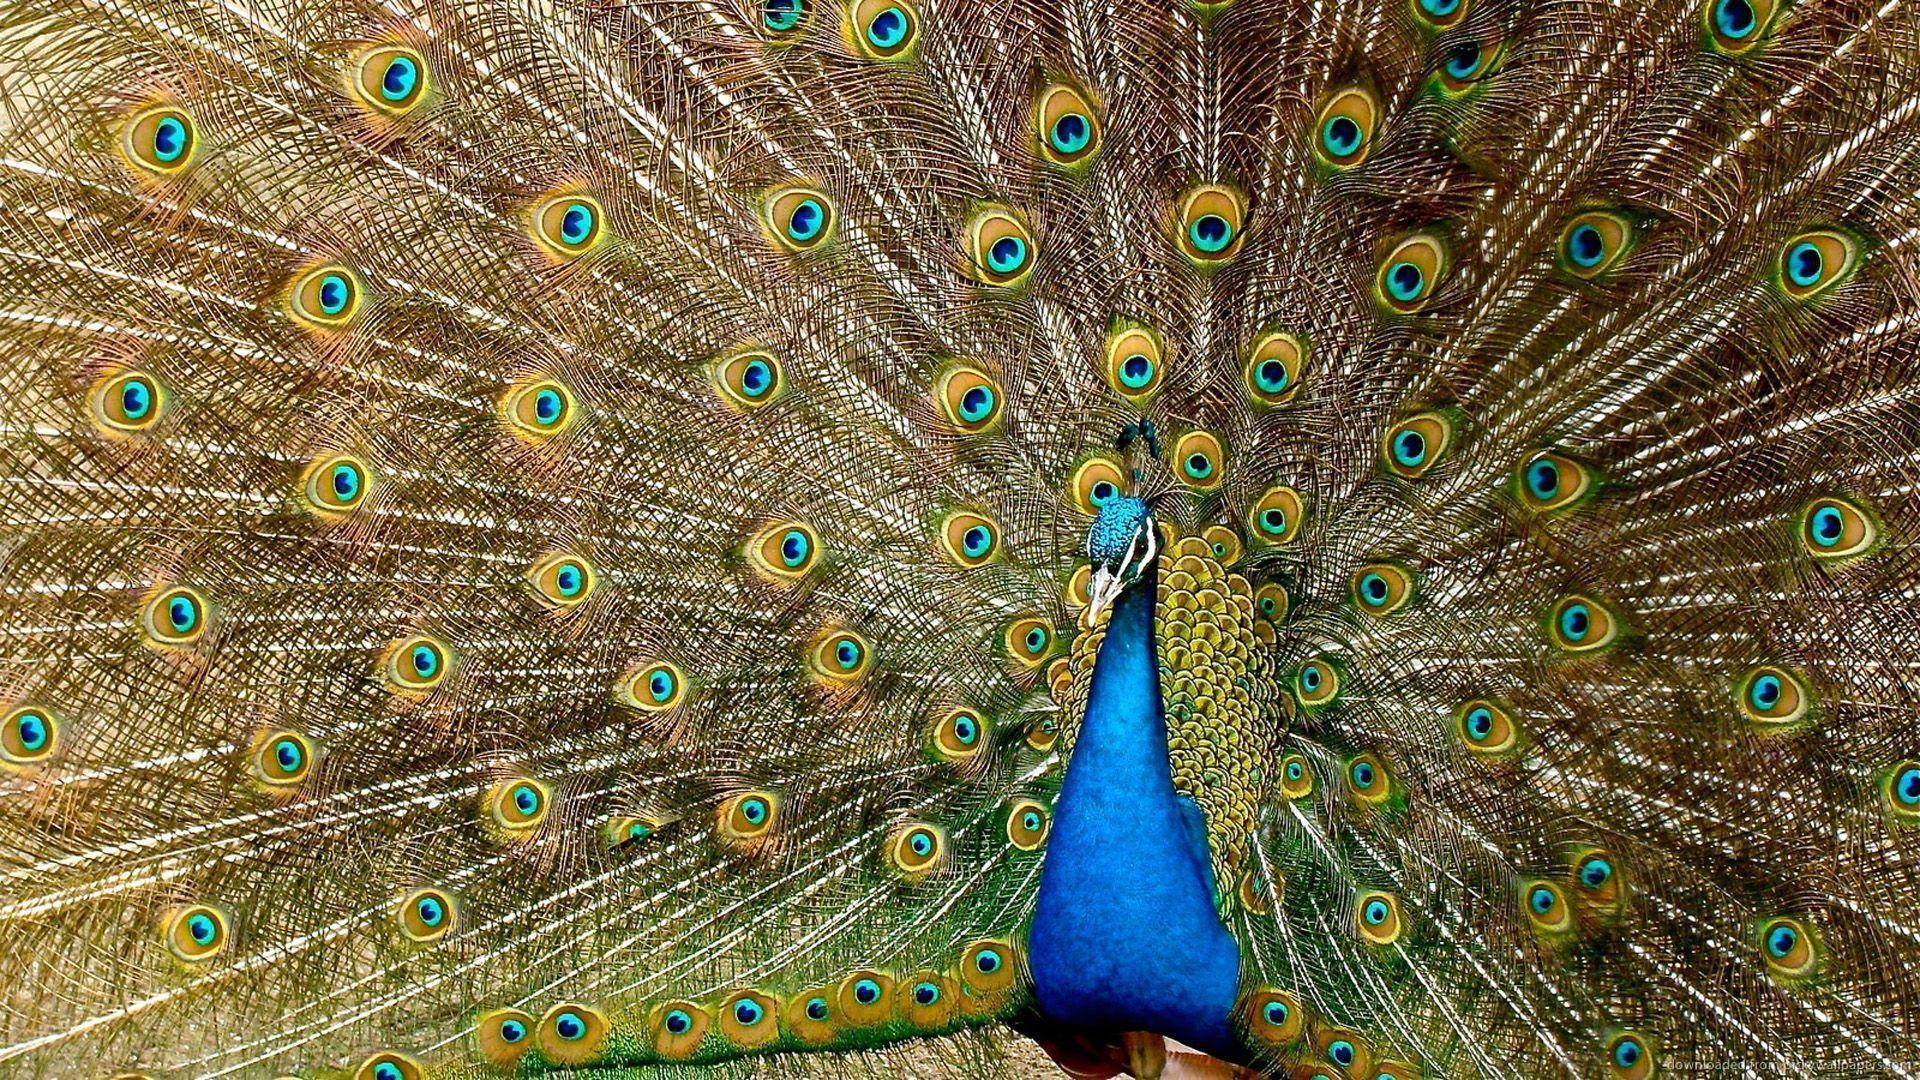 1920x1080 Peacock Feathers Spread Hd Desktop Wallpaper : Wallpapers13.com